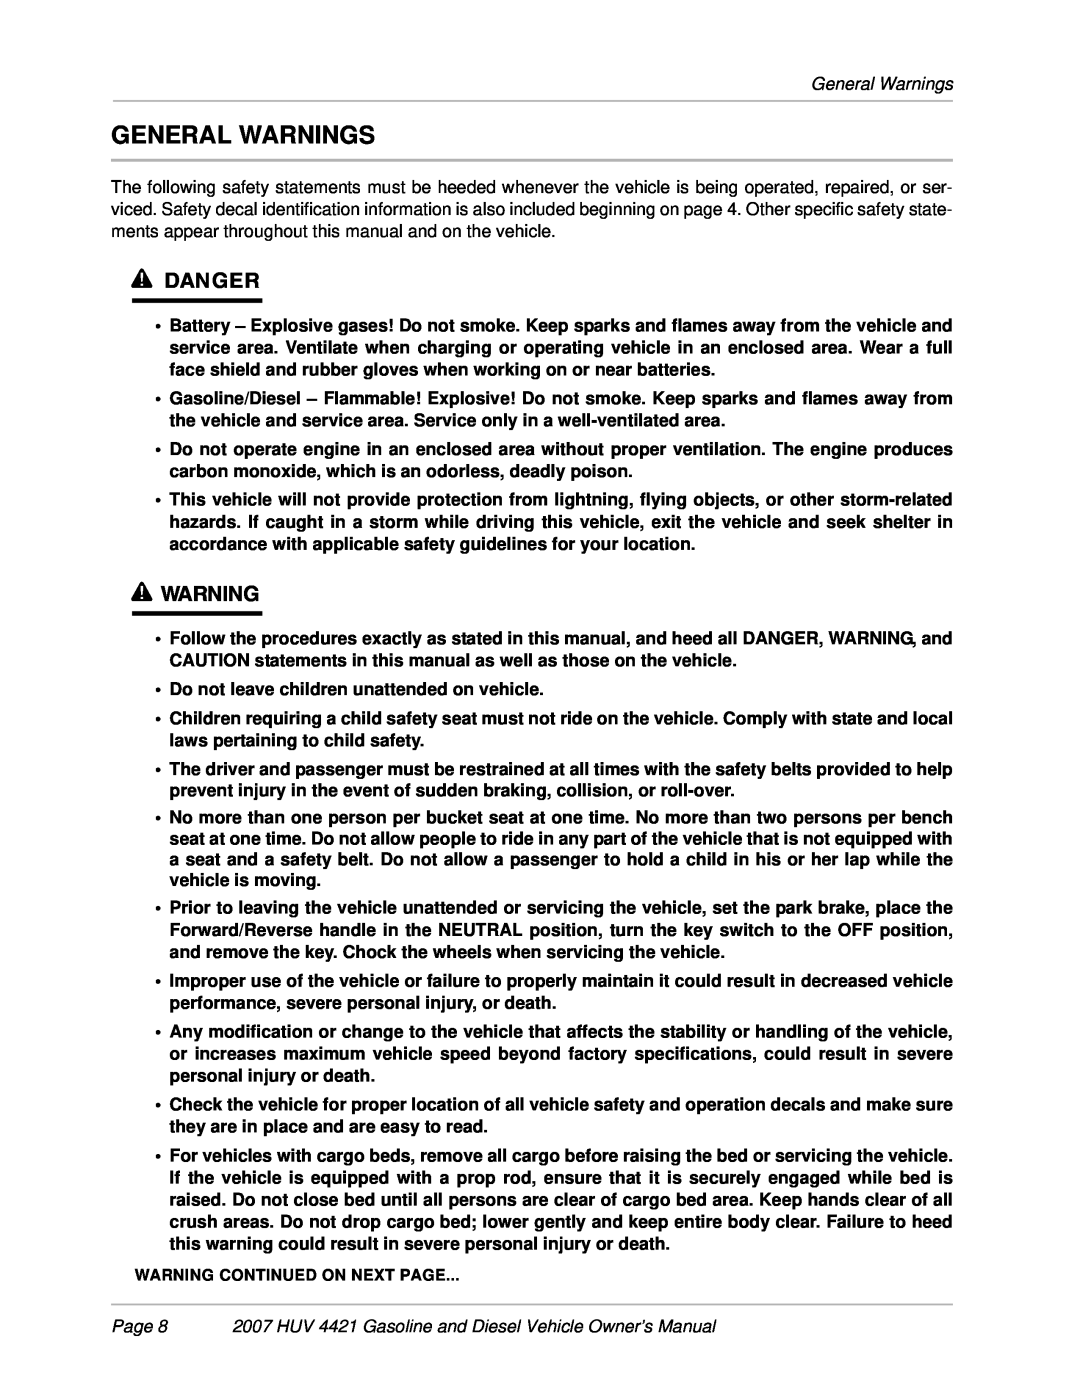 Husqvarna HUV 4421-G / GXP General Warnings, Page 8 2007 HUV 4421 Gasoline and Diesel Vehicle Owner’s Manual, ý DAN G E R 